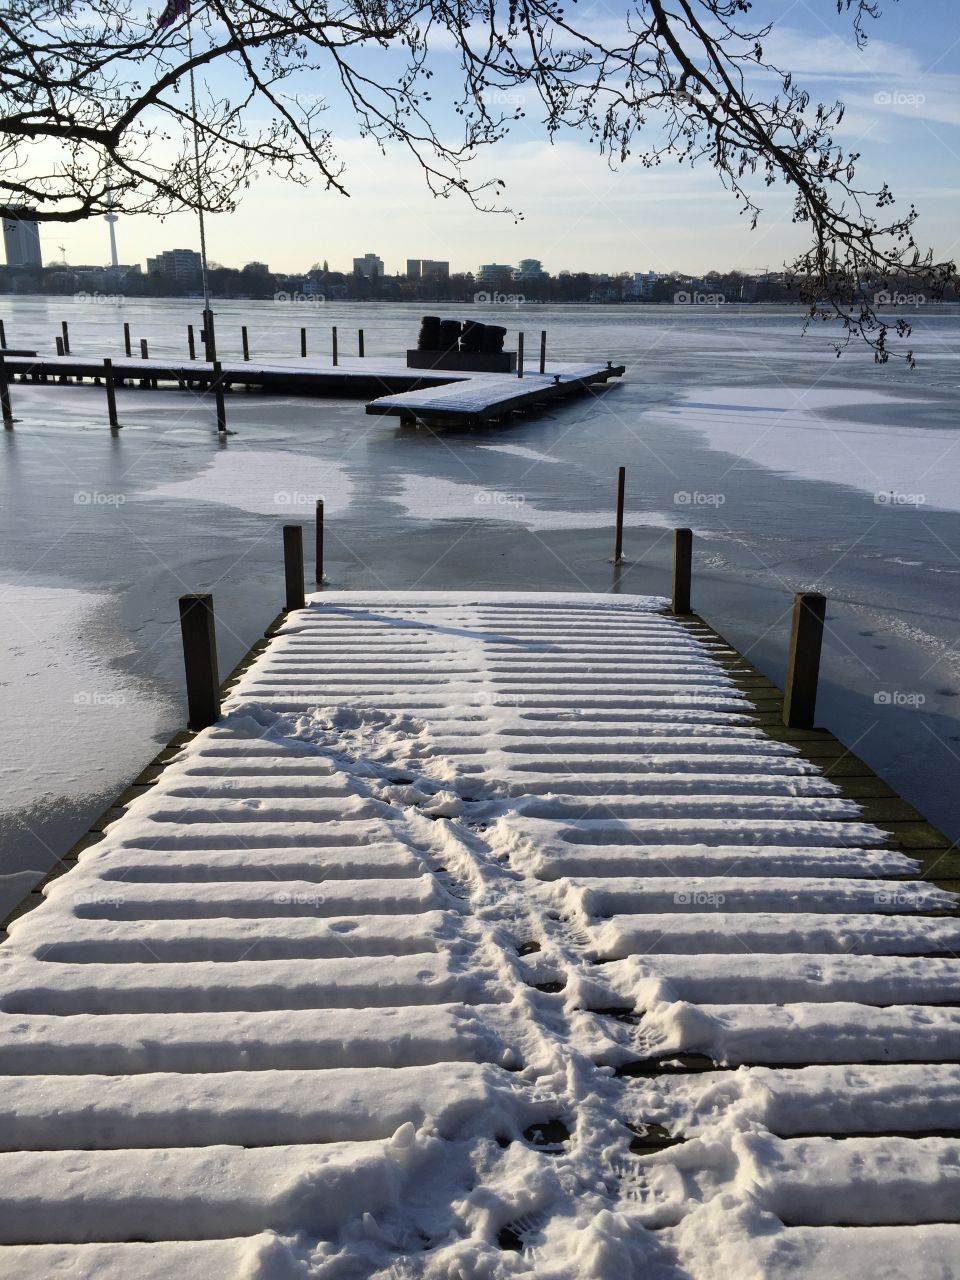 Snow on the lake
